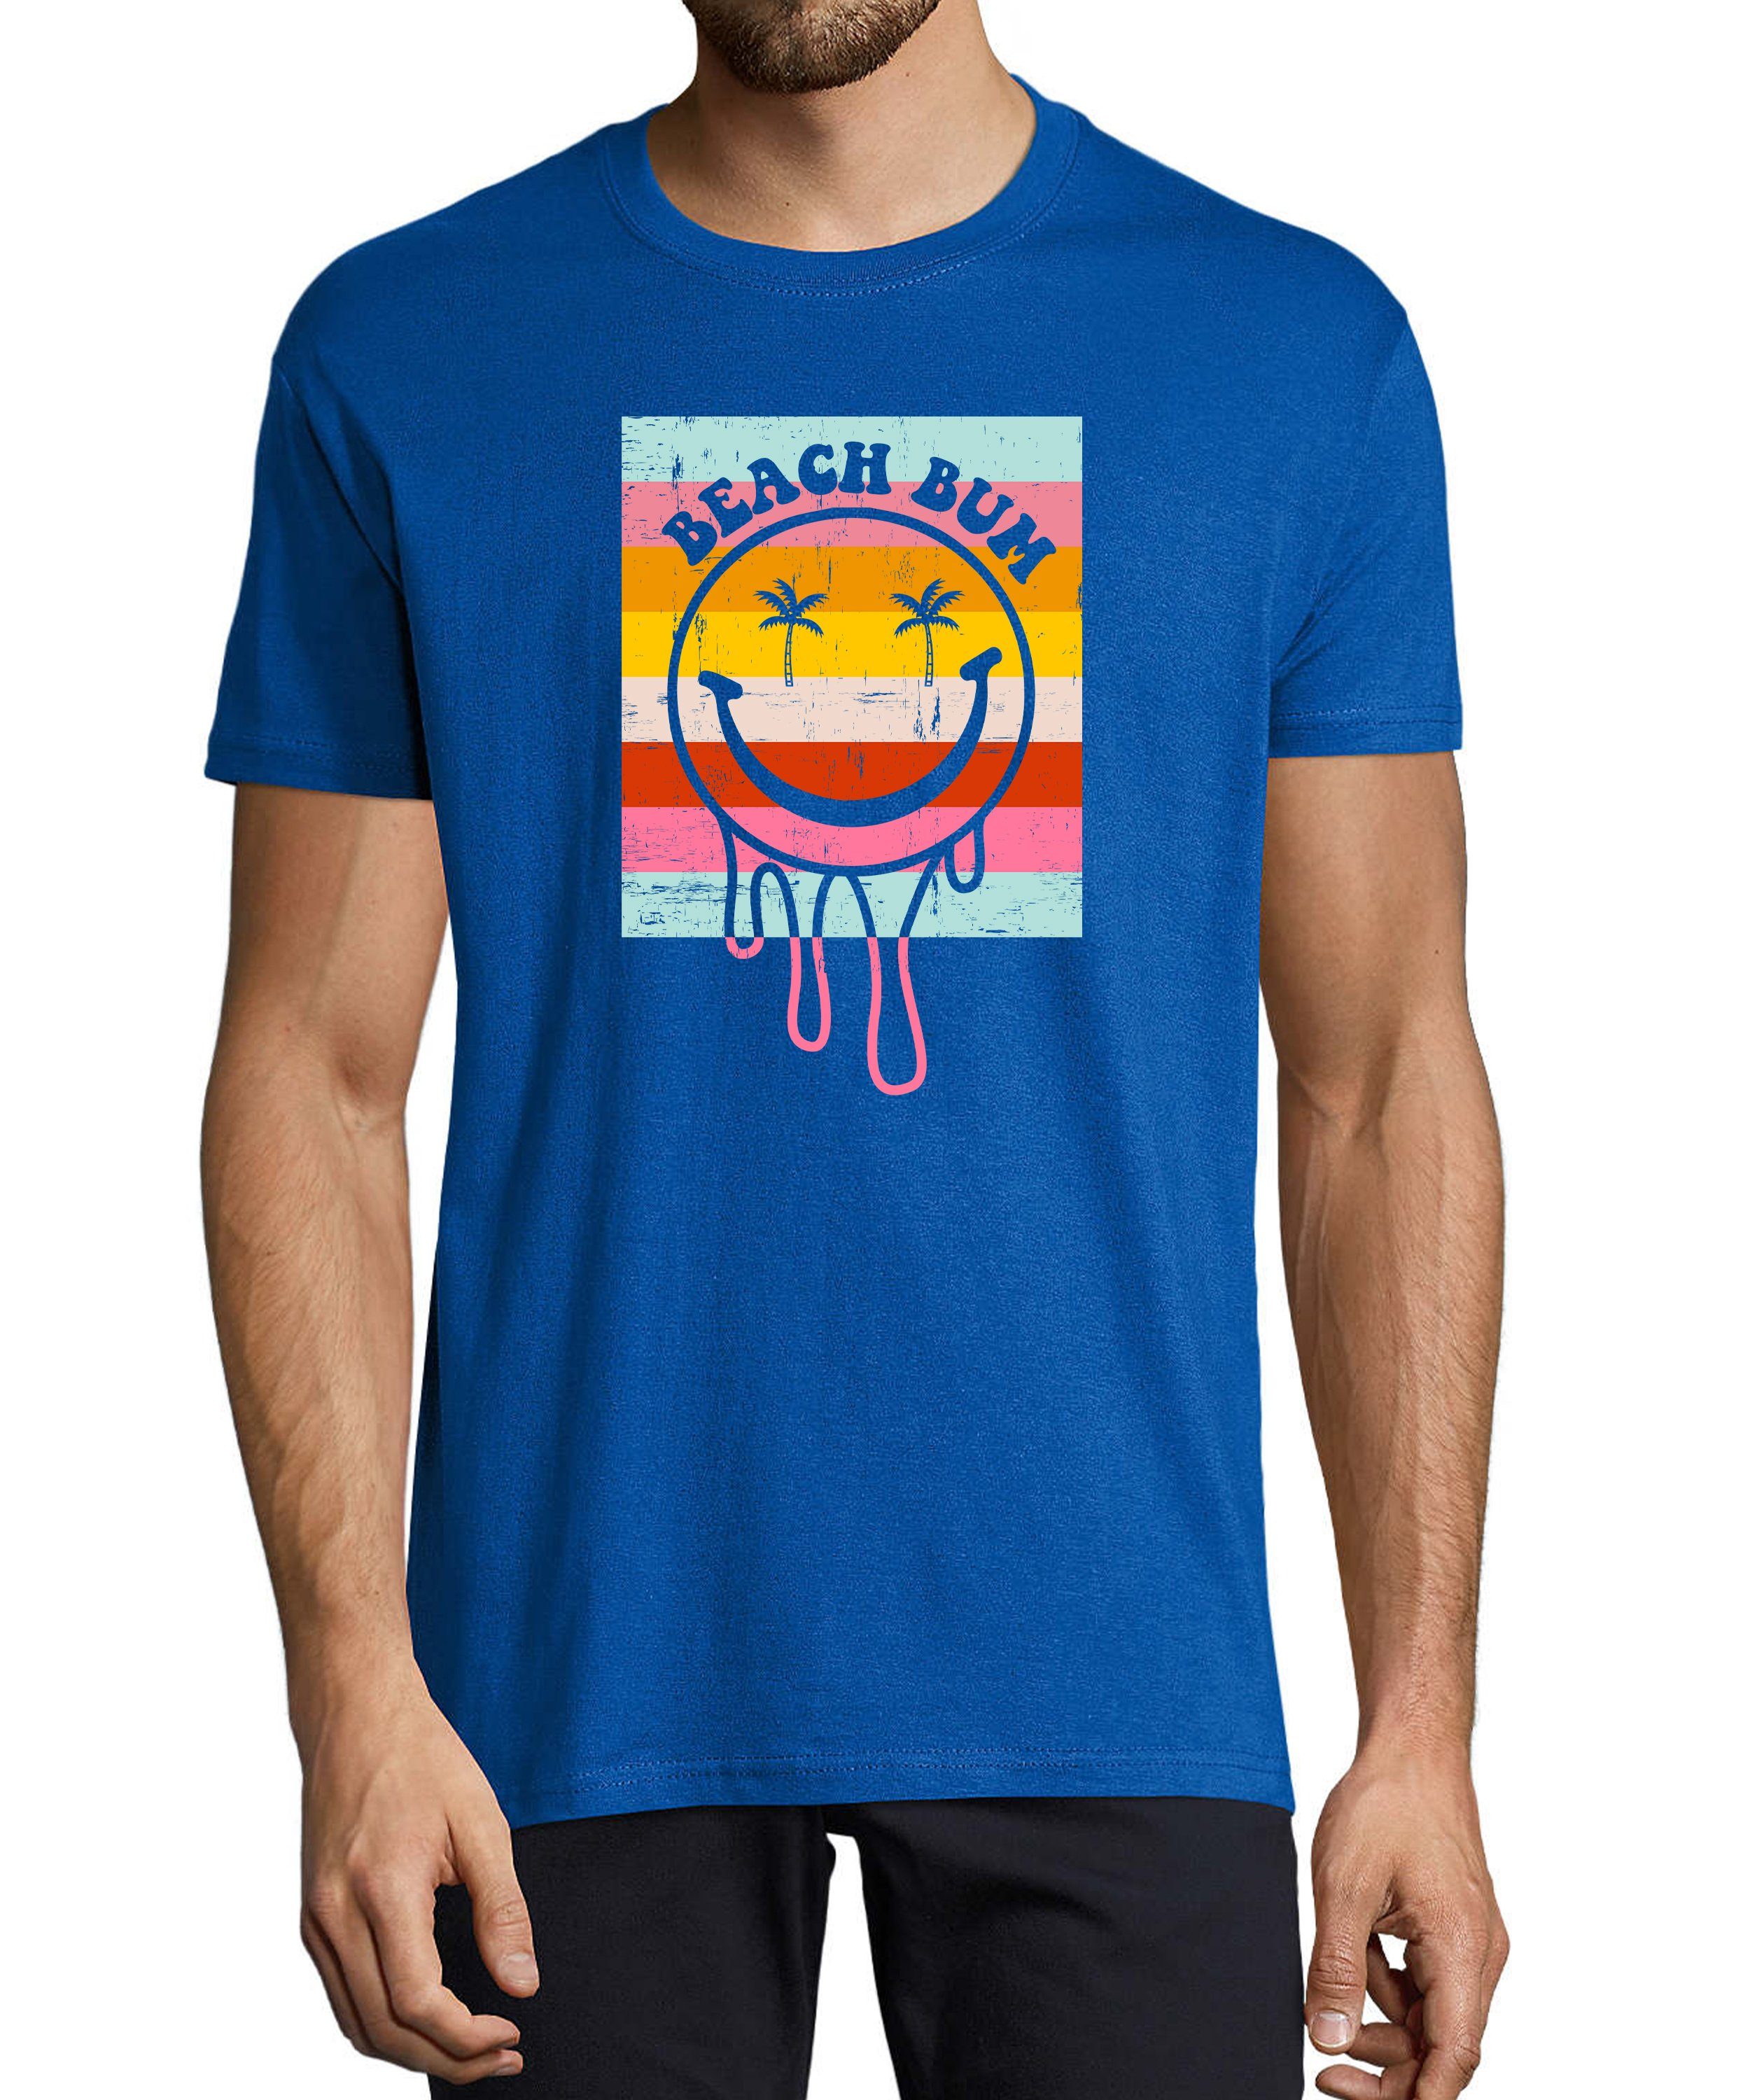 MyDesign24 T-Shirt Herren Smiley Print Shirt - Bunter Beach Bum Smiley Baumwollshirt mit Aufdruck Regular Fit, i291 royal blau